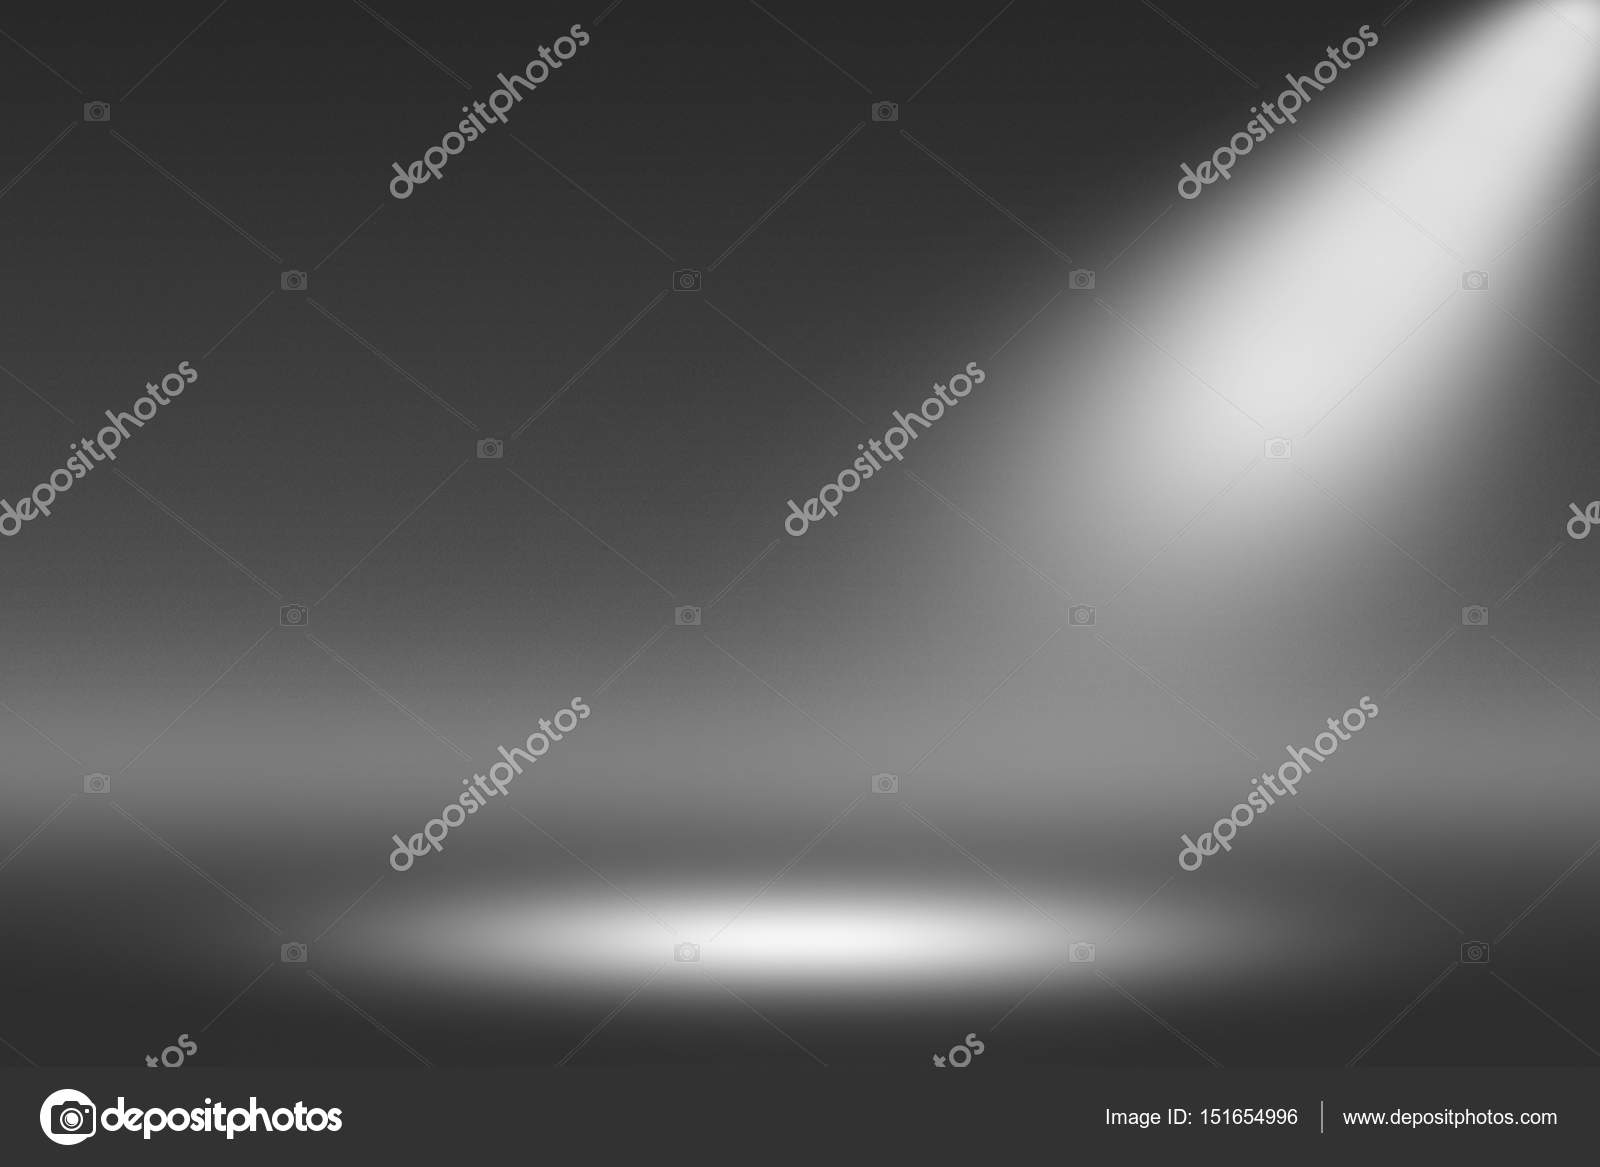 Product Showscase Spotlight on Black Background - Dark Room ...